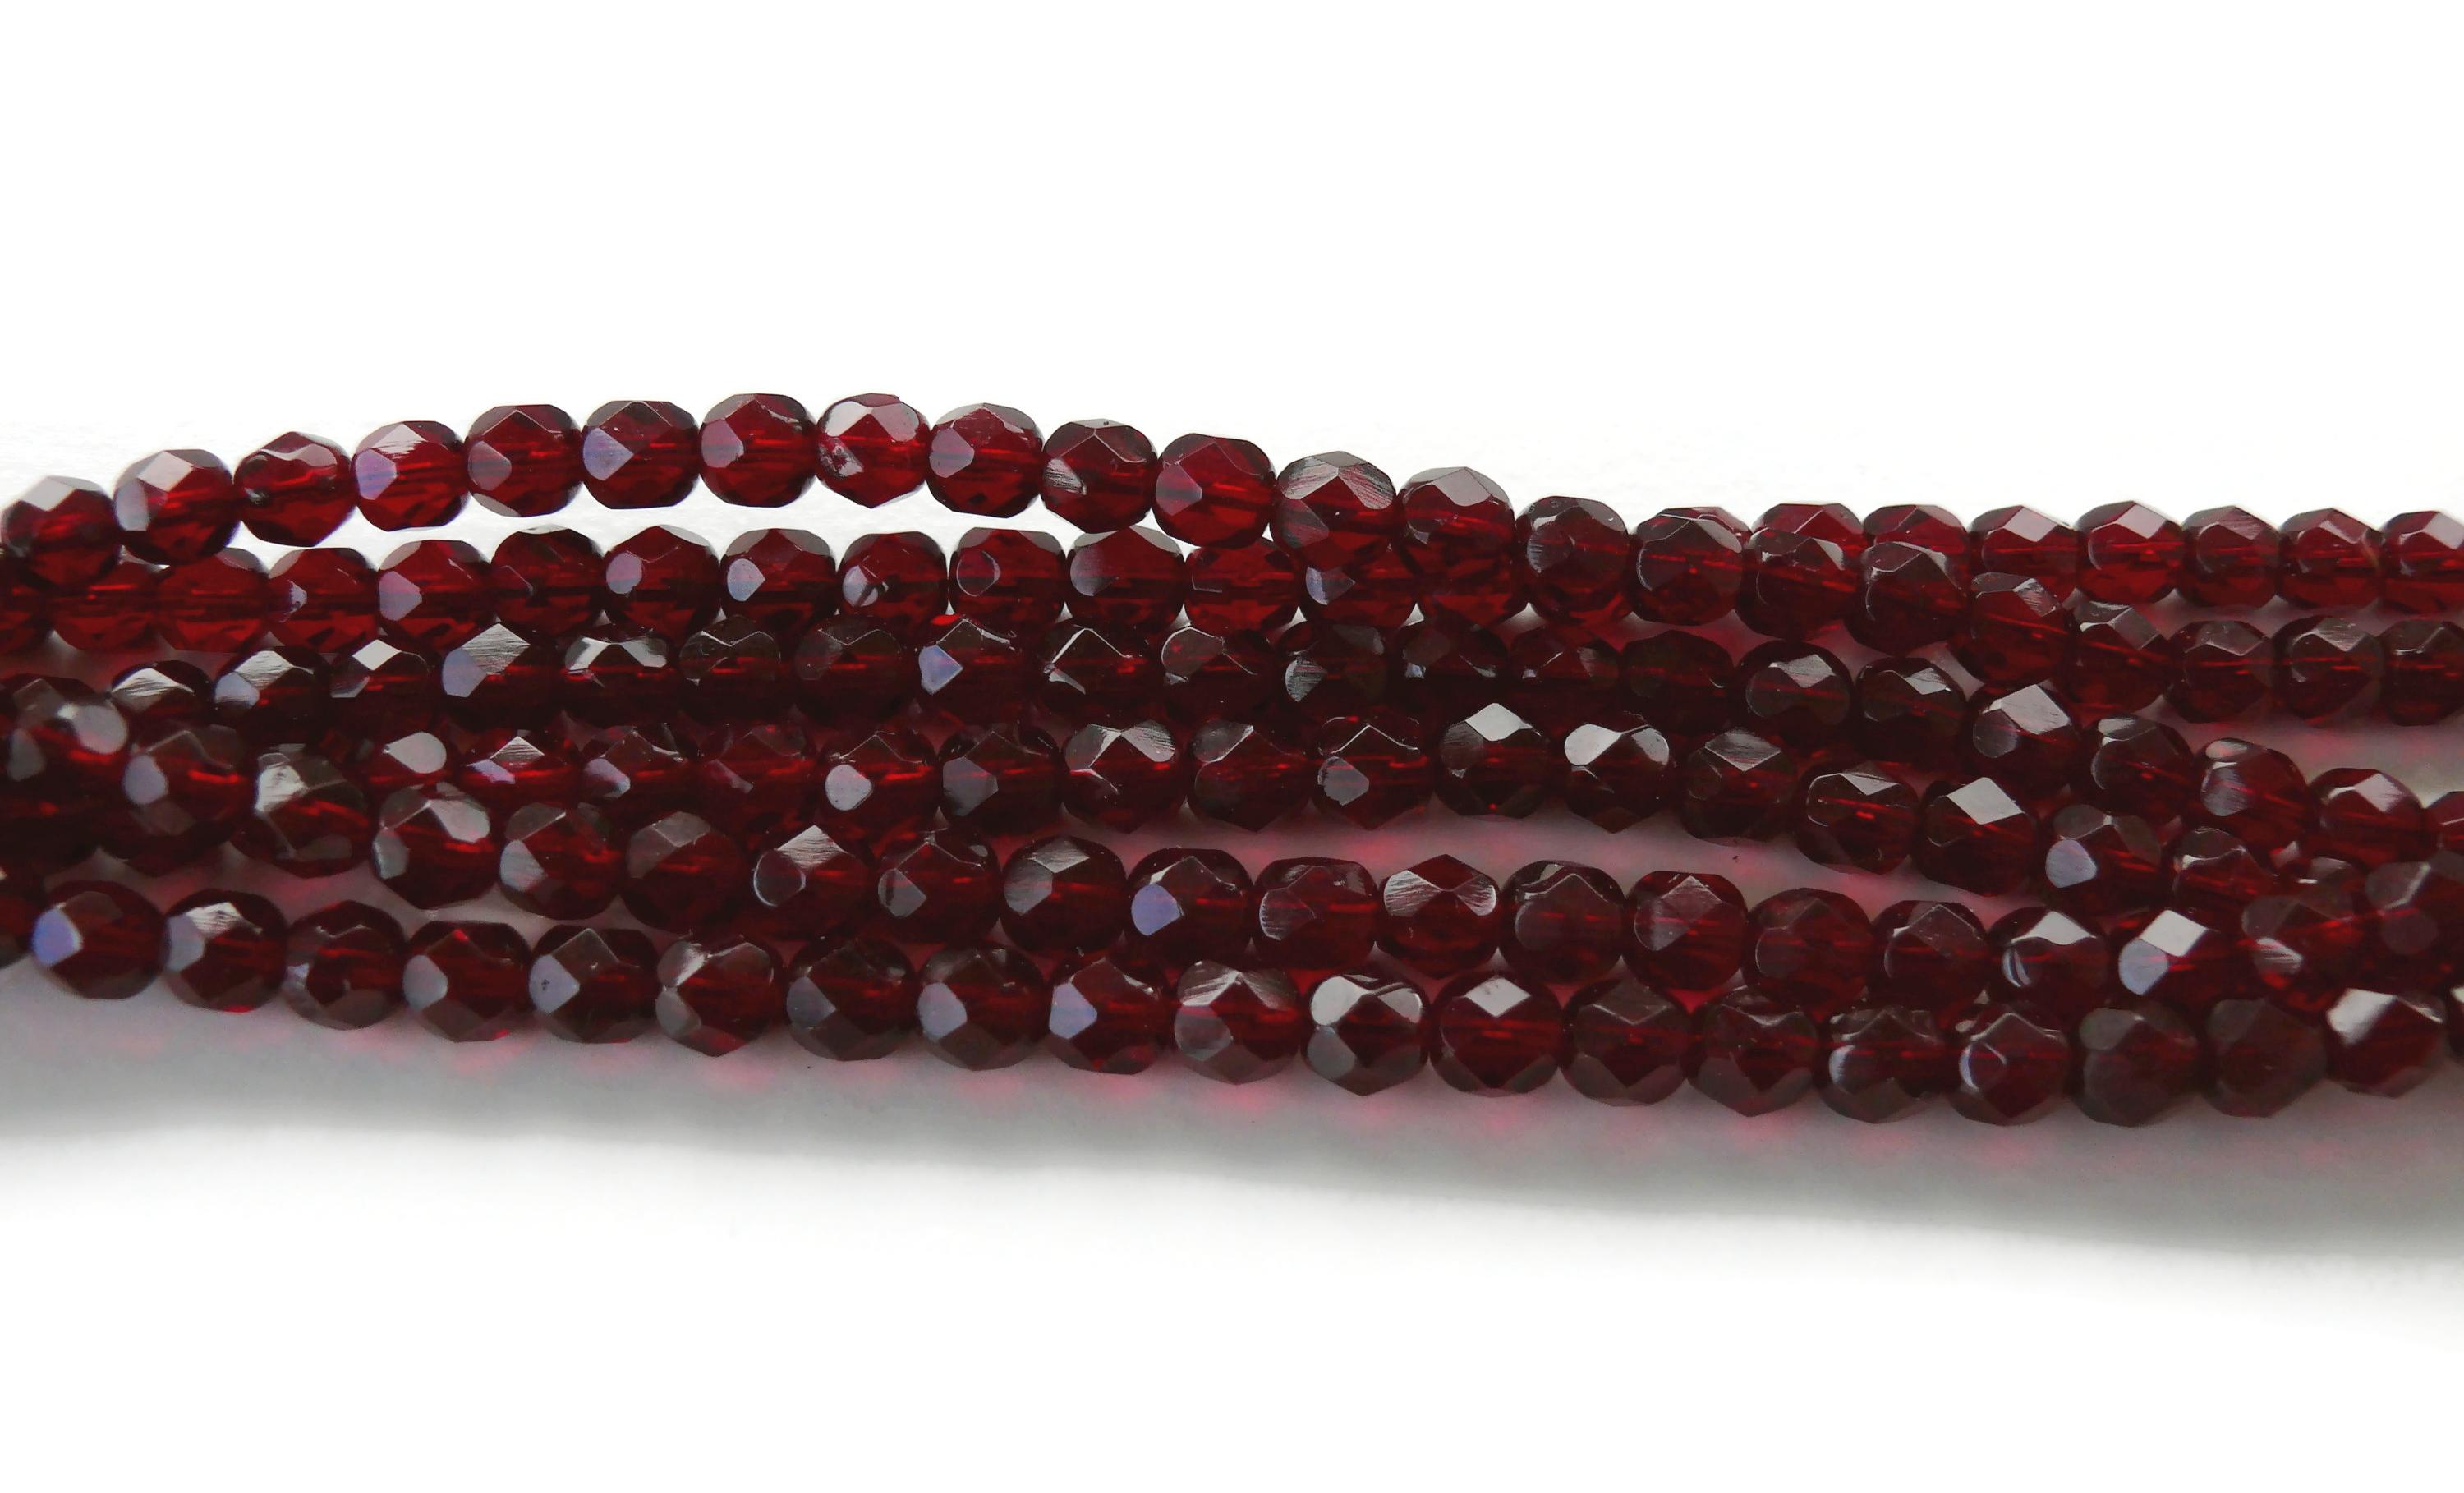 Christian Dior Hypnotic Poison Promotional Multi Strand Garnet Beads Bracelet For Sale 2